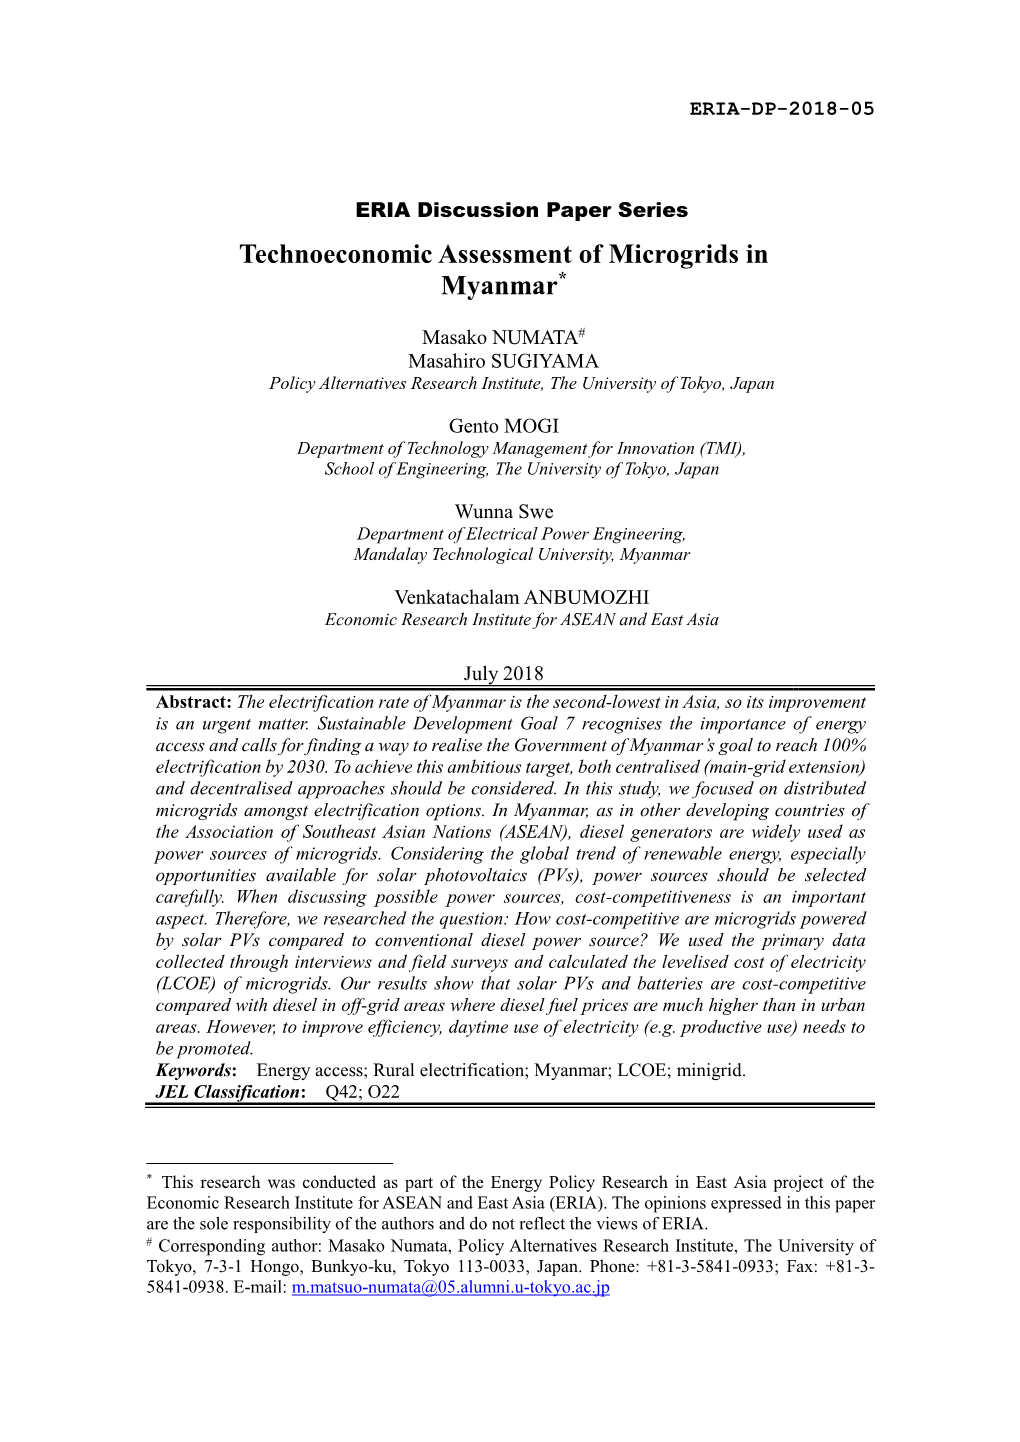 Technoeconomic Assessment of Microgrids in Myanmar*